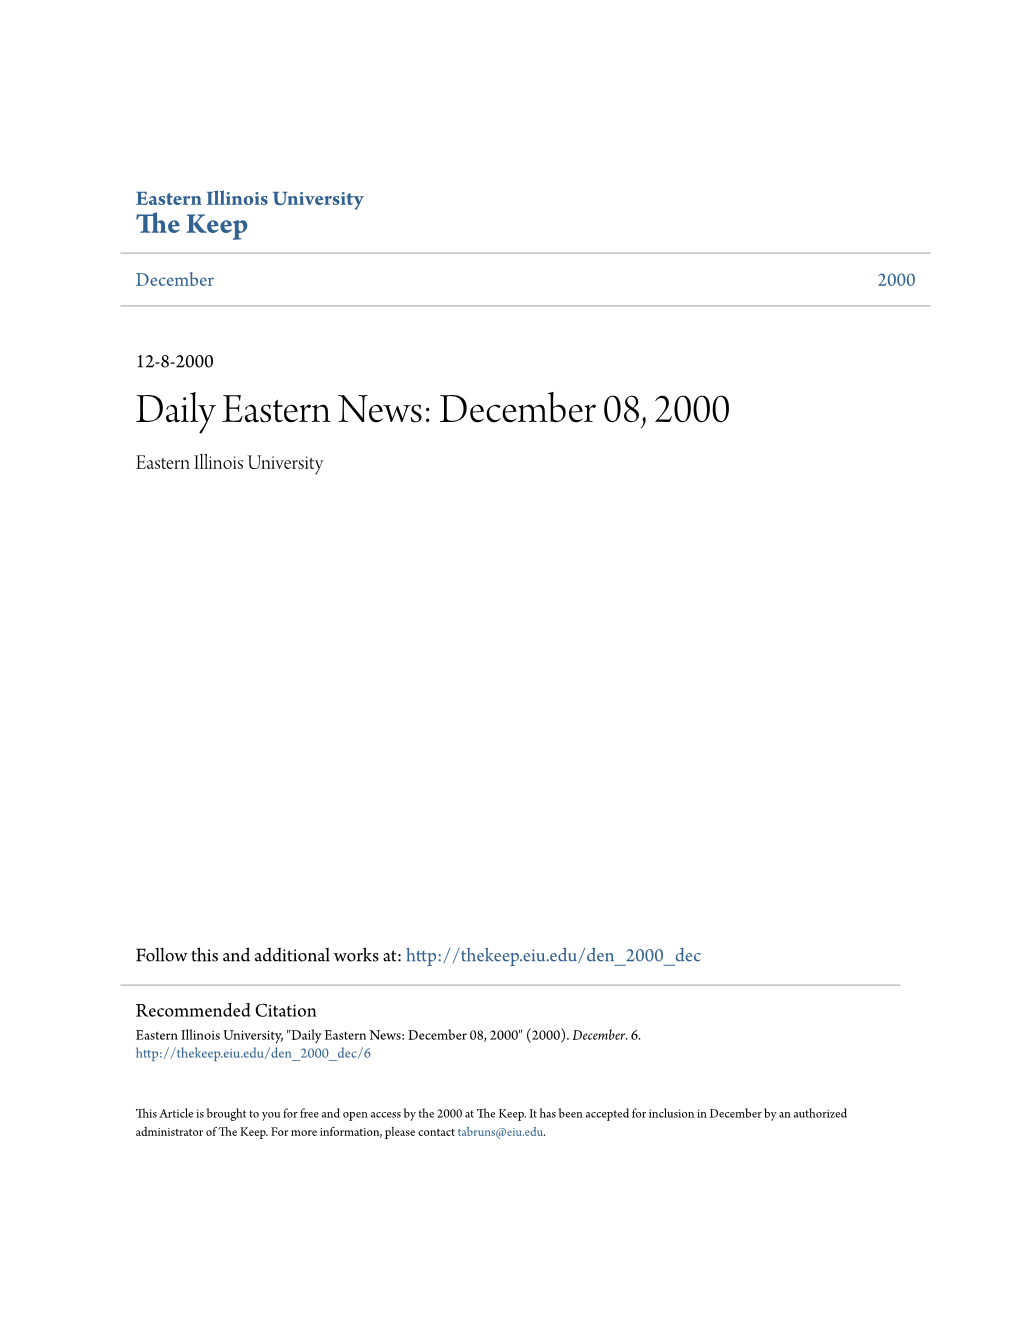 Eastern News: December 08, 2000 Eastern Illinois University